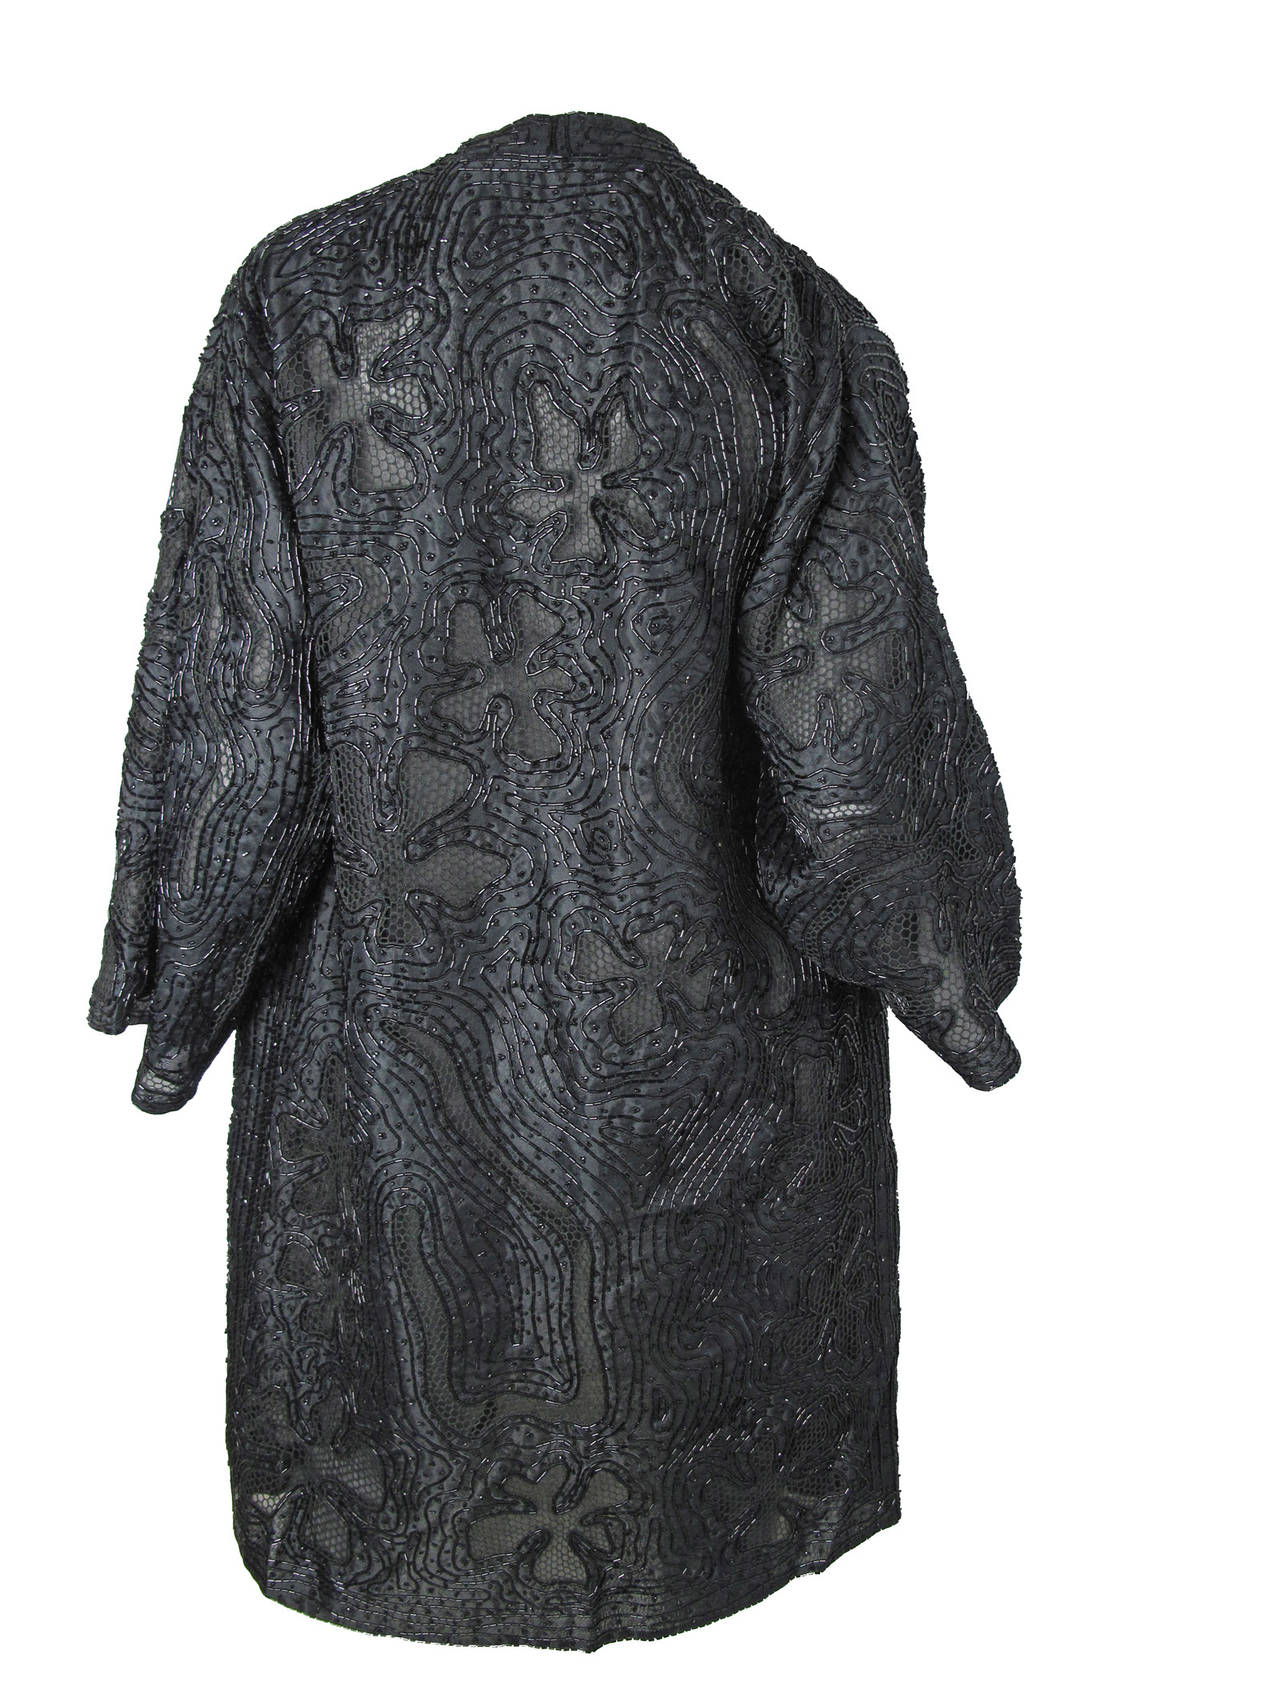 Black Rare Late 70s - early 80s Halston Beaded Lace Evening Coat